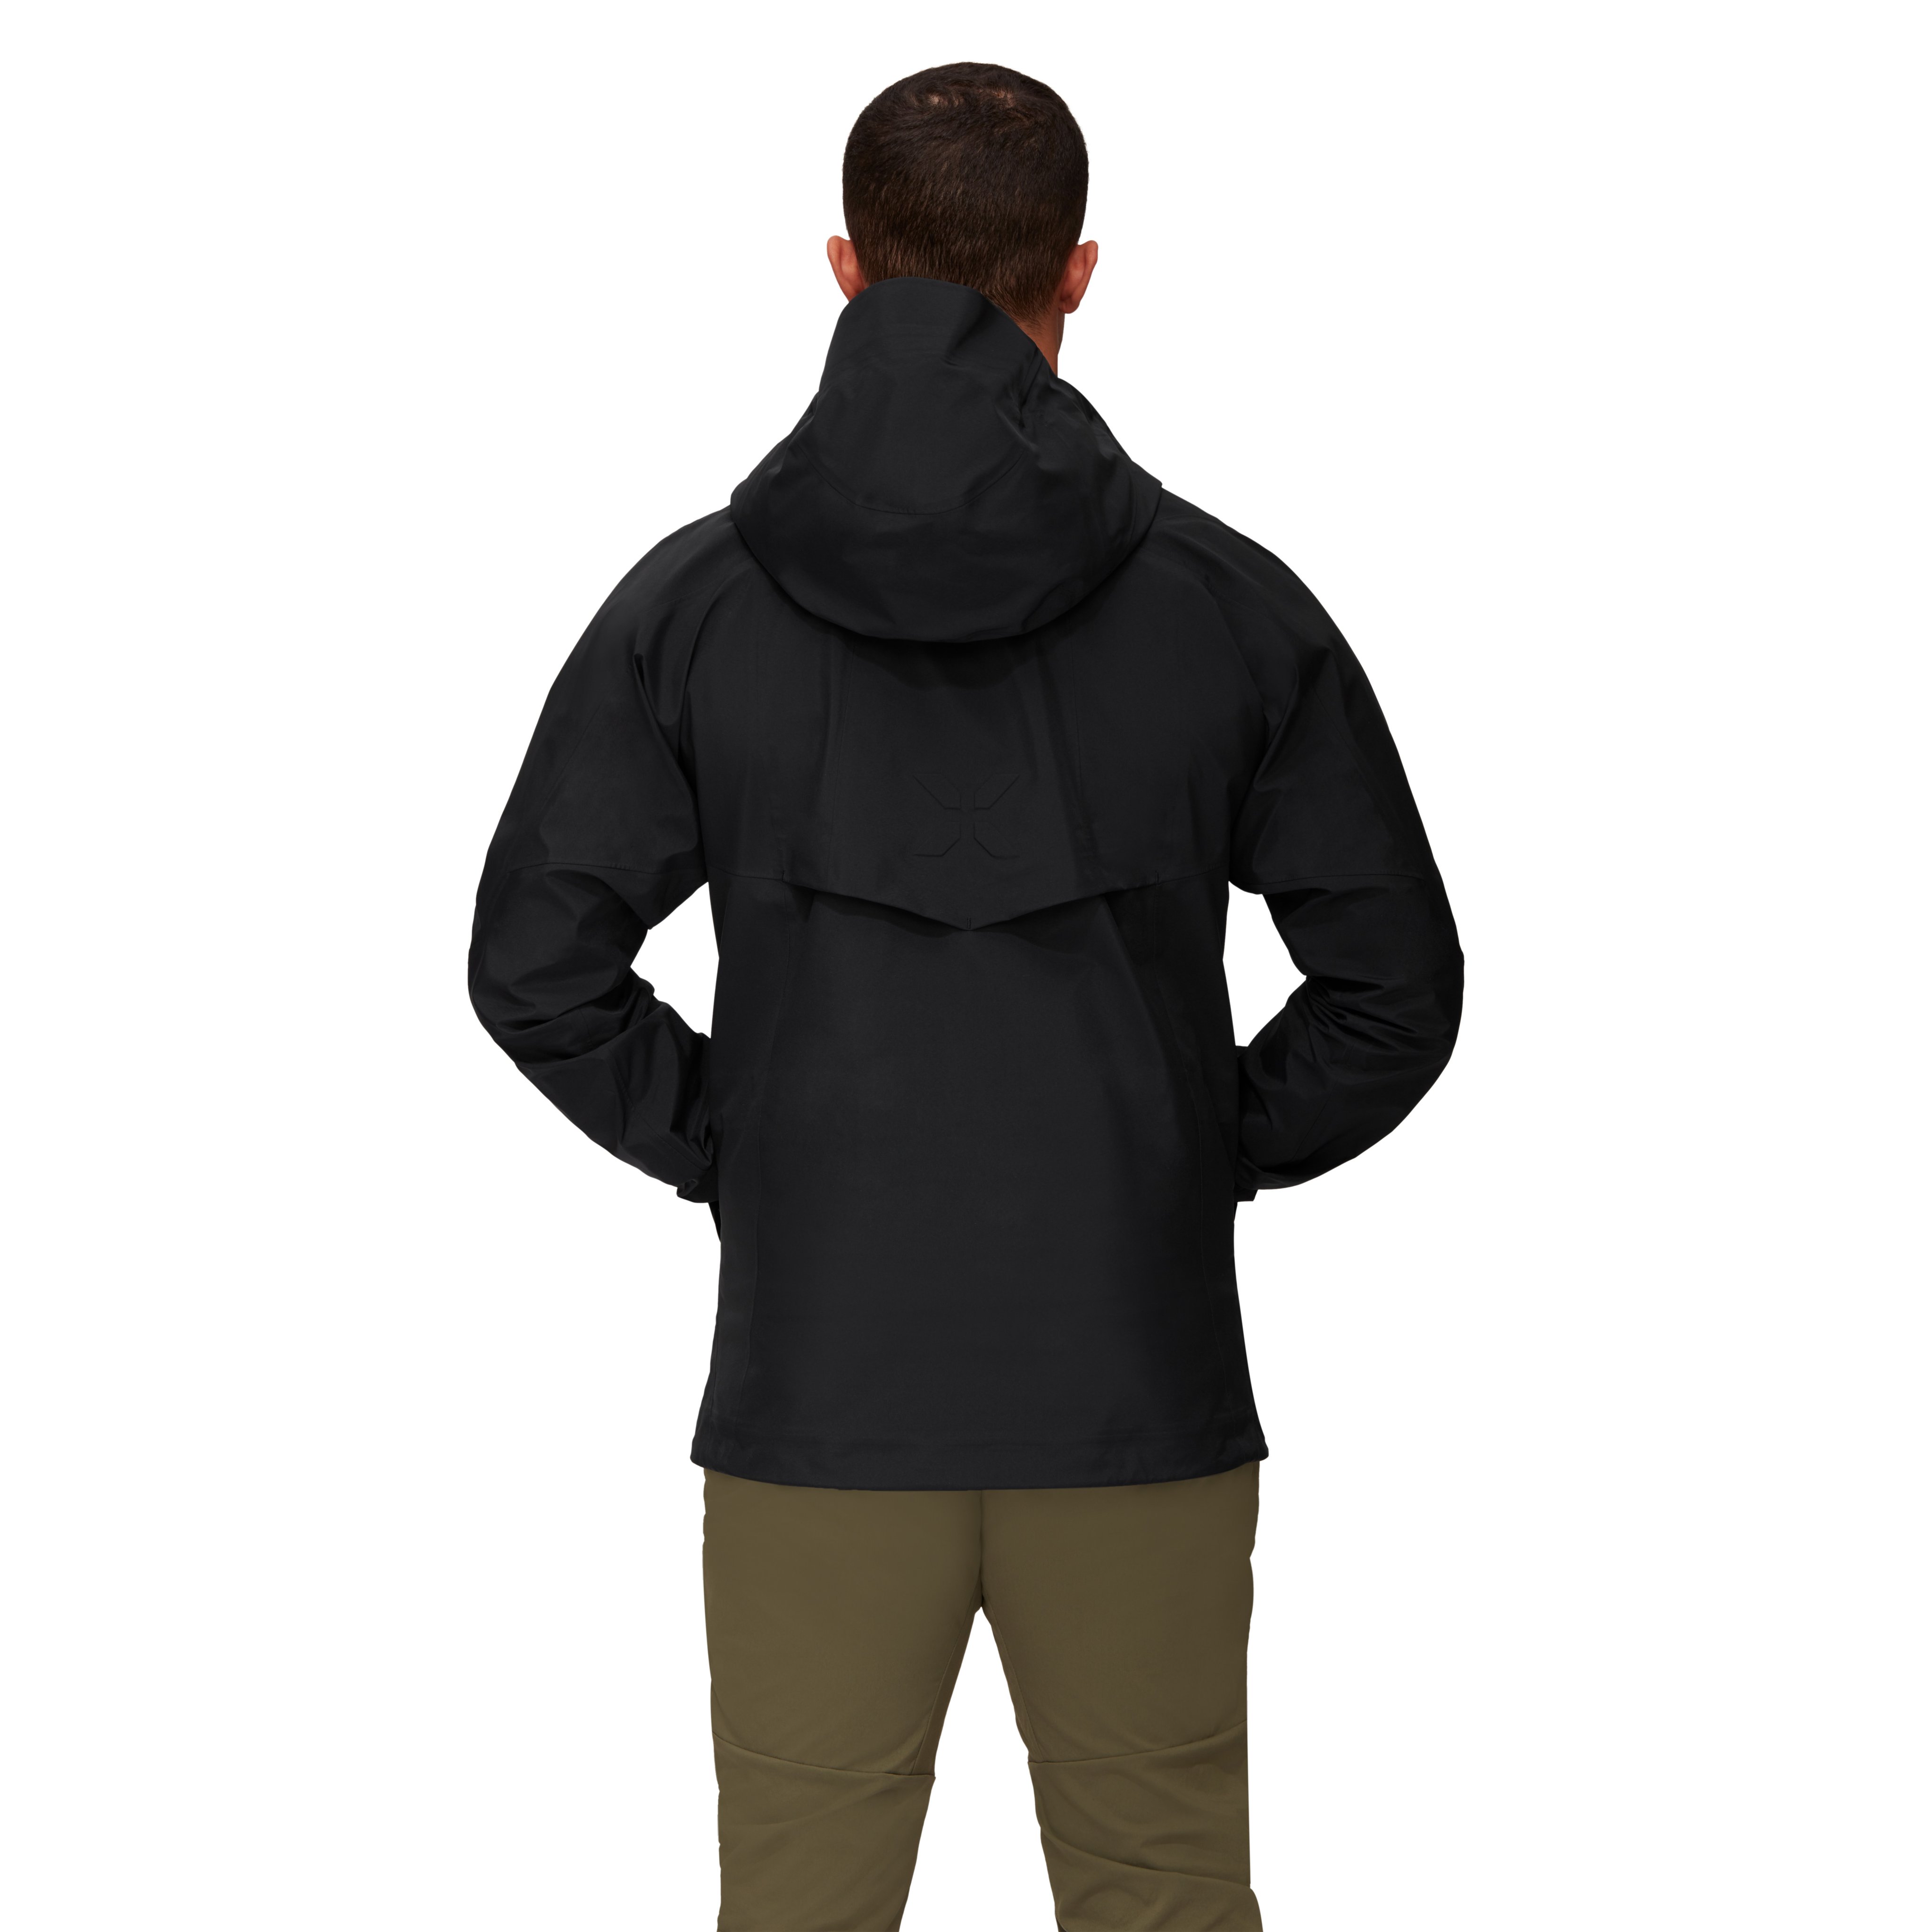 3850 HS Hooded Jacket Men product image